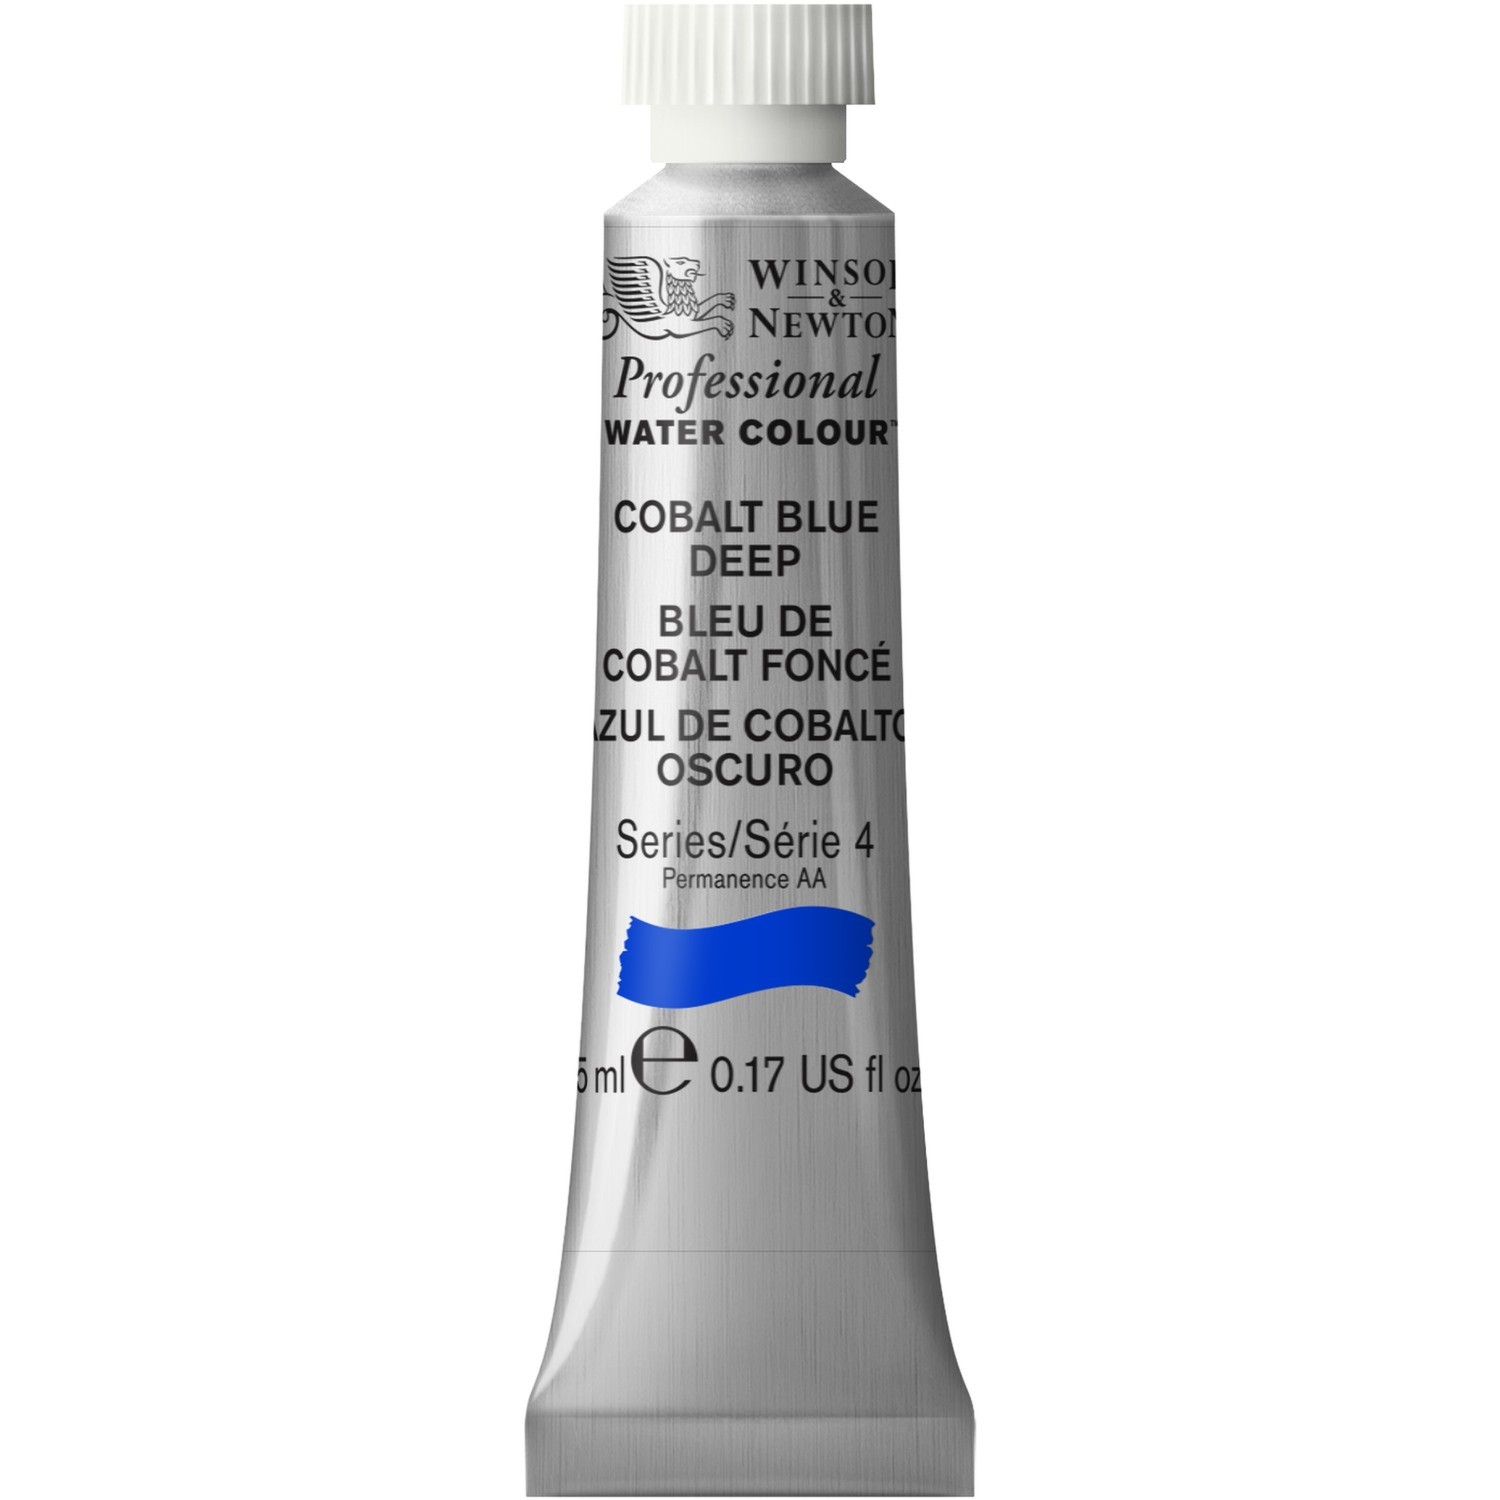 Winsor and Newton 5ml Professional Watercolour Paint - Cobalt Blue Deep Image 1